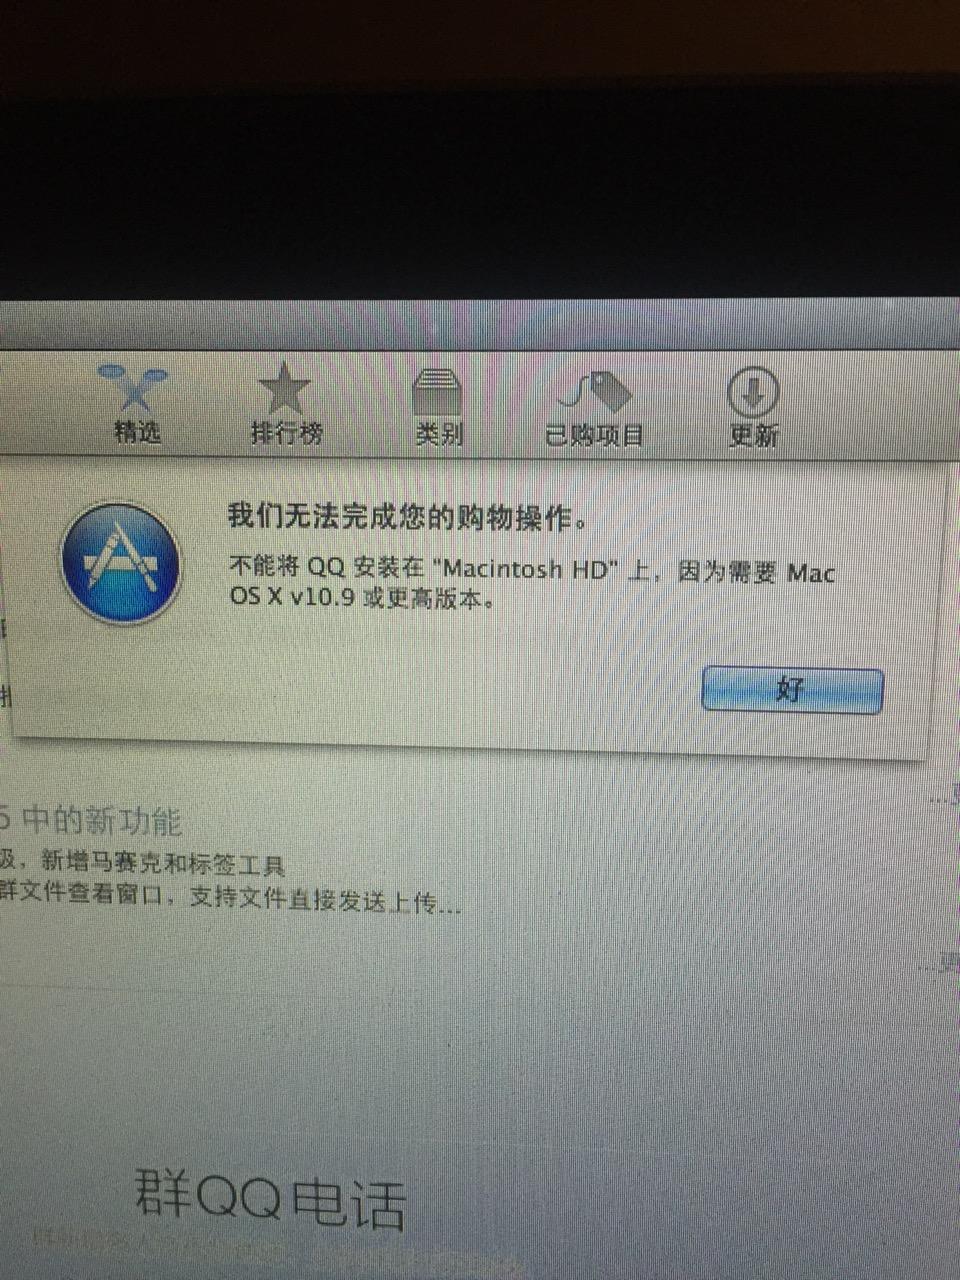 macbook 下载软件为何一直显示 不能将软件安